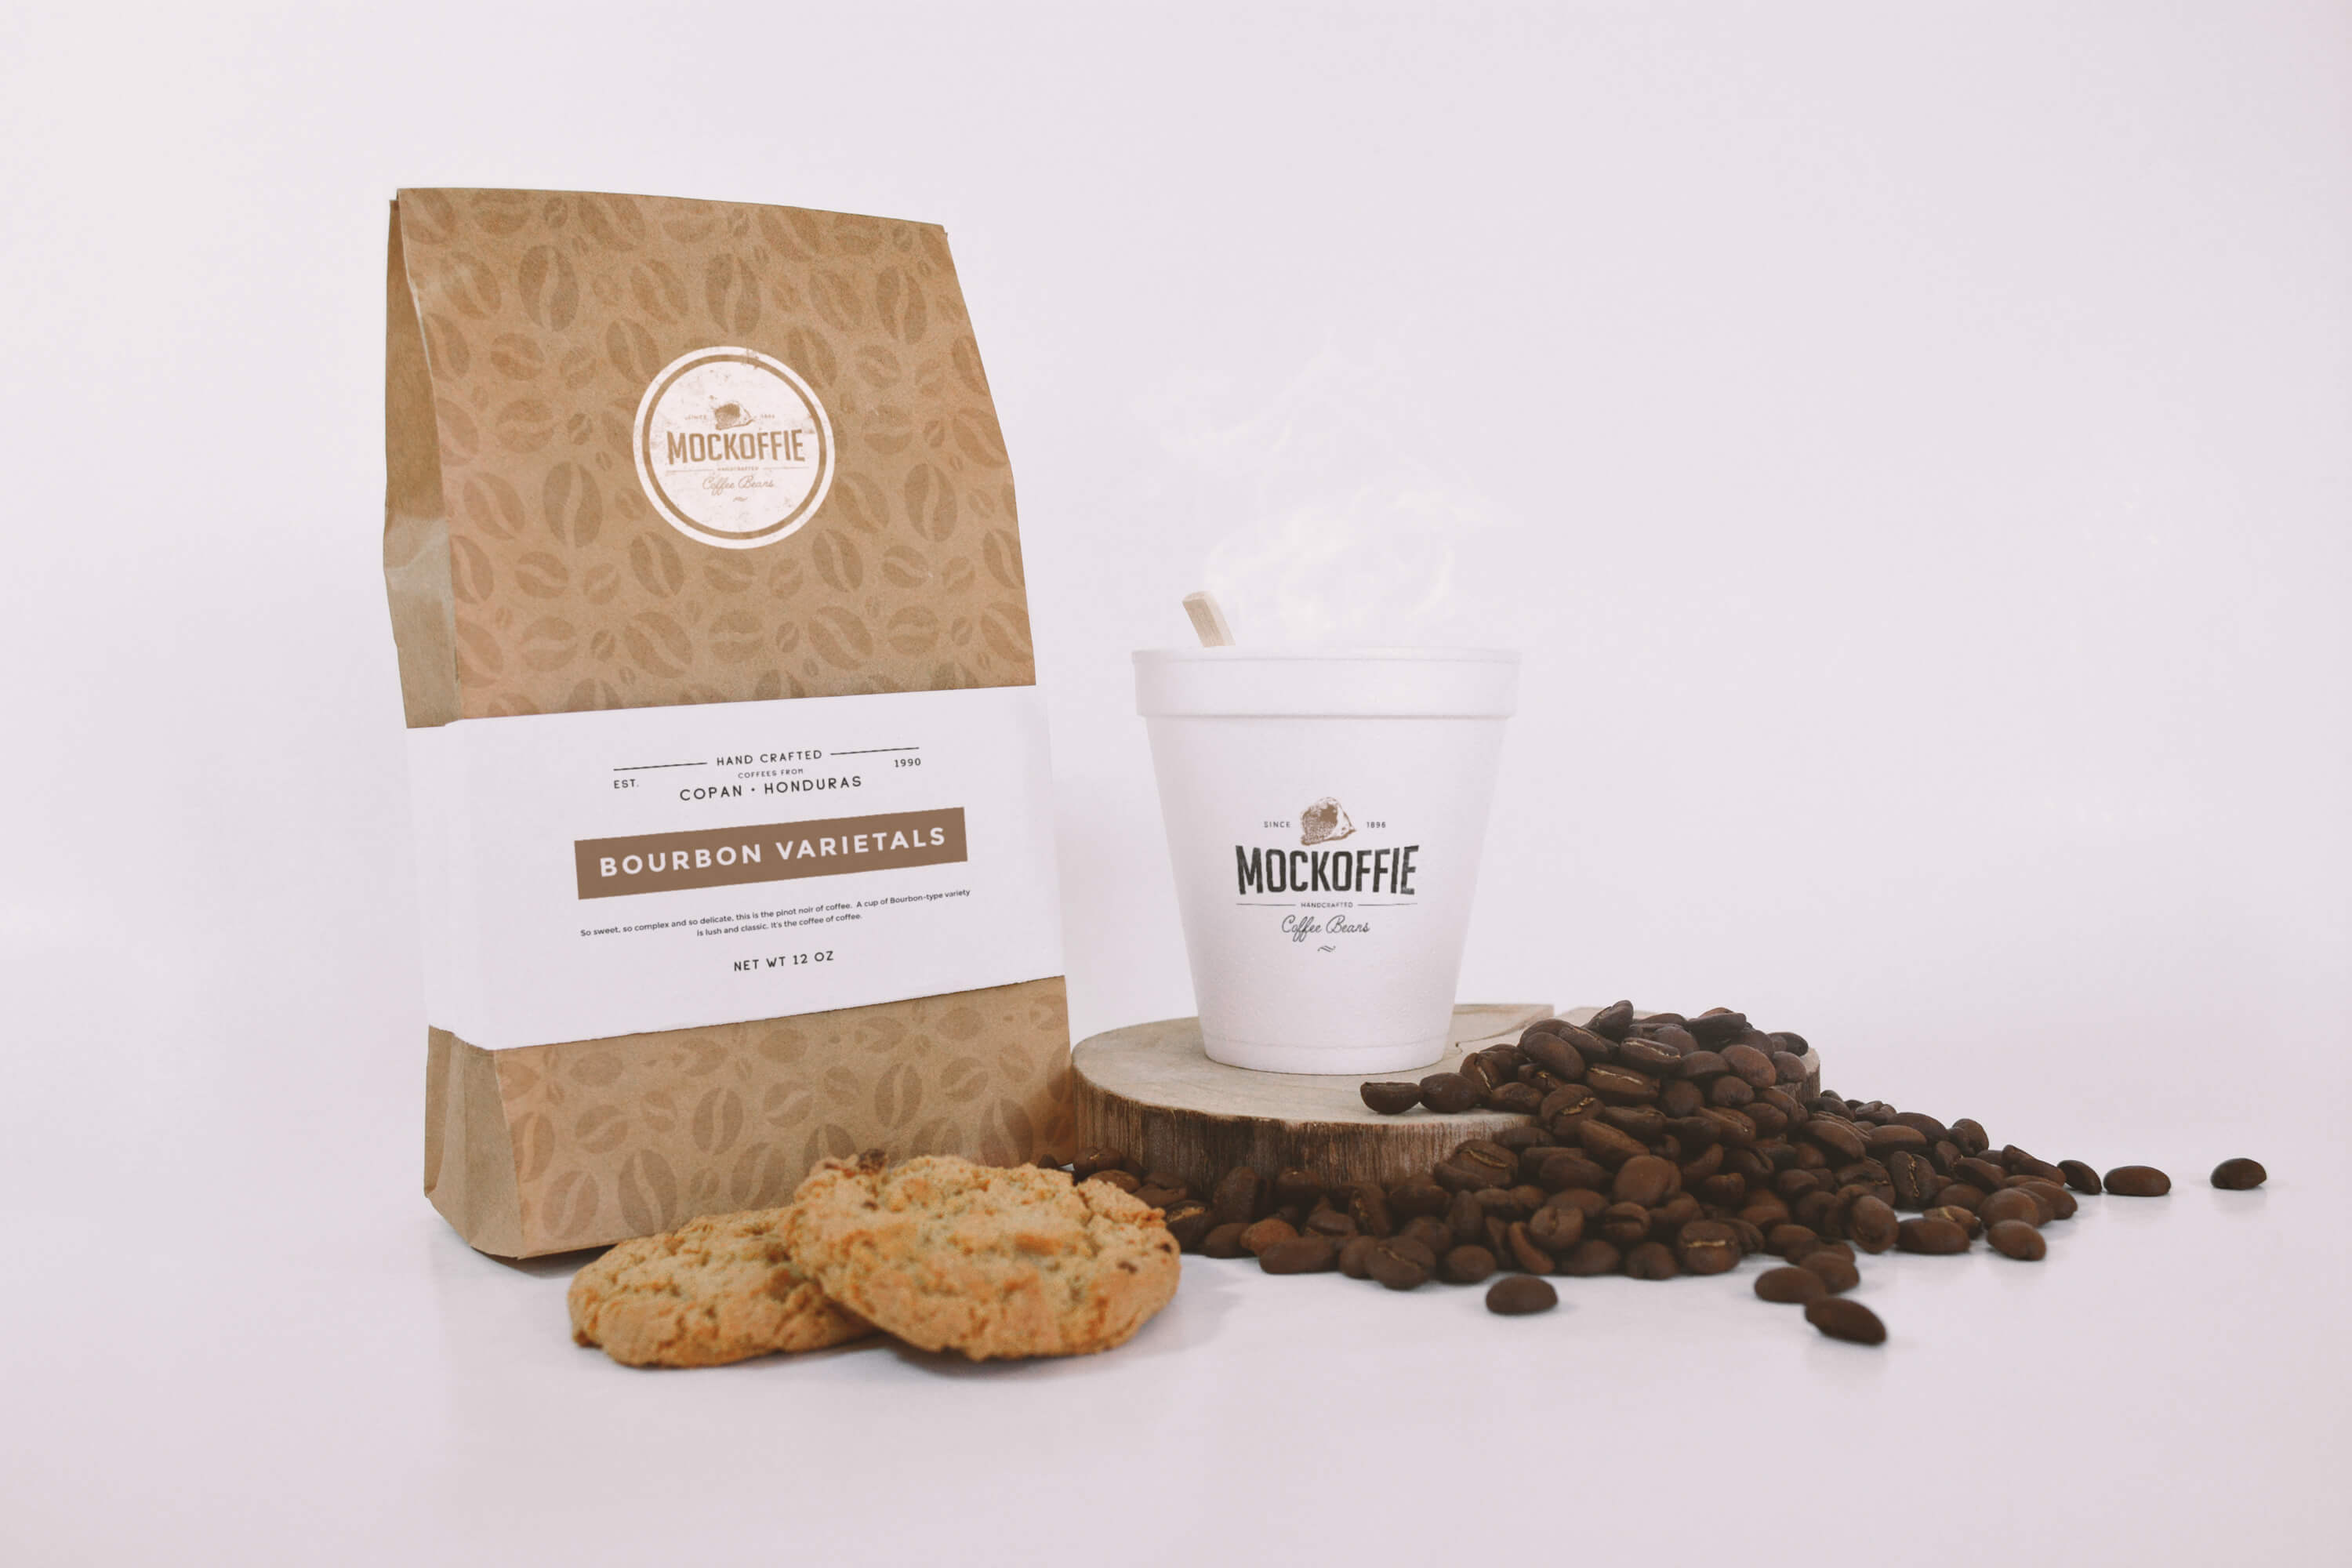 咖啡豆包装麻袋&咖啡纸杯品牌VI设计样机模板 Coffee Bag and Cup Mockup With Cookies插图